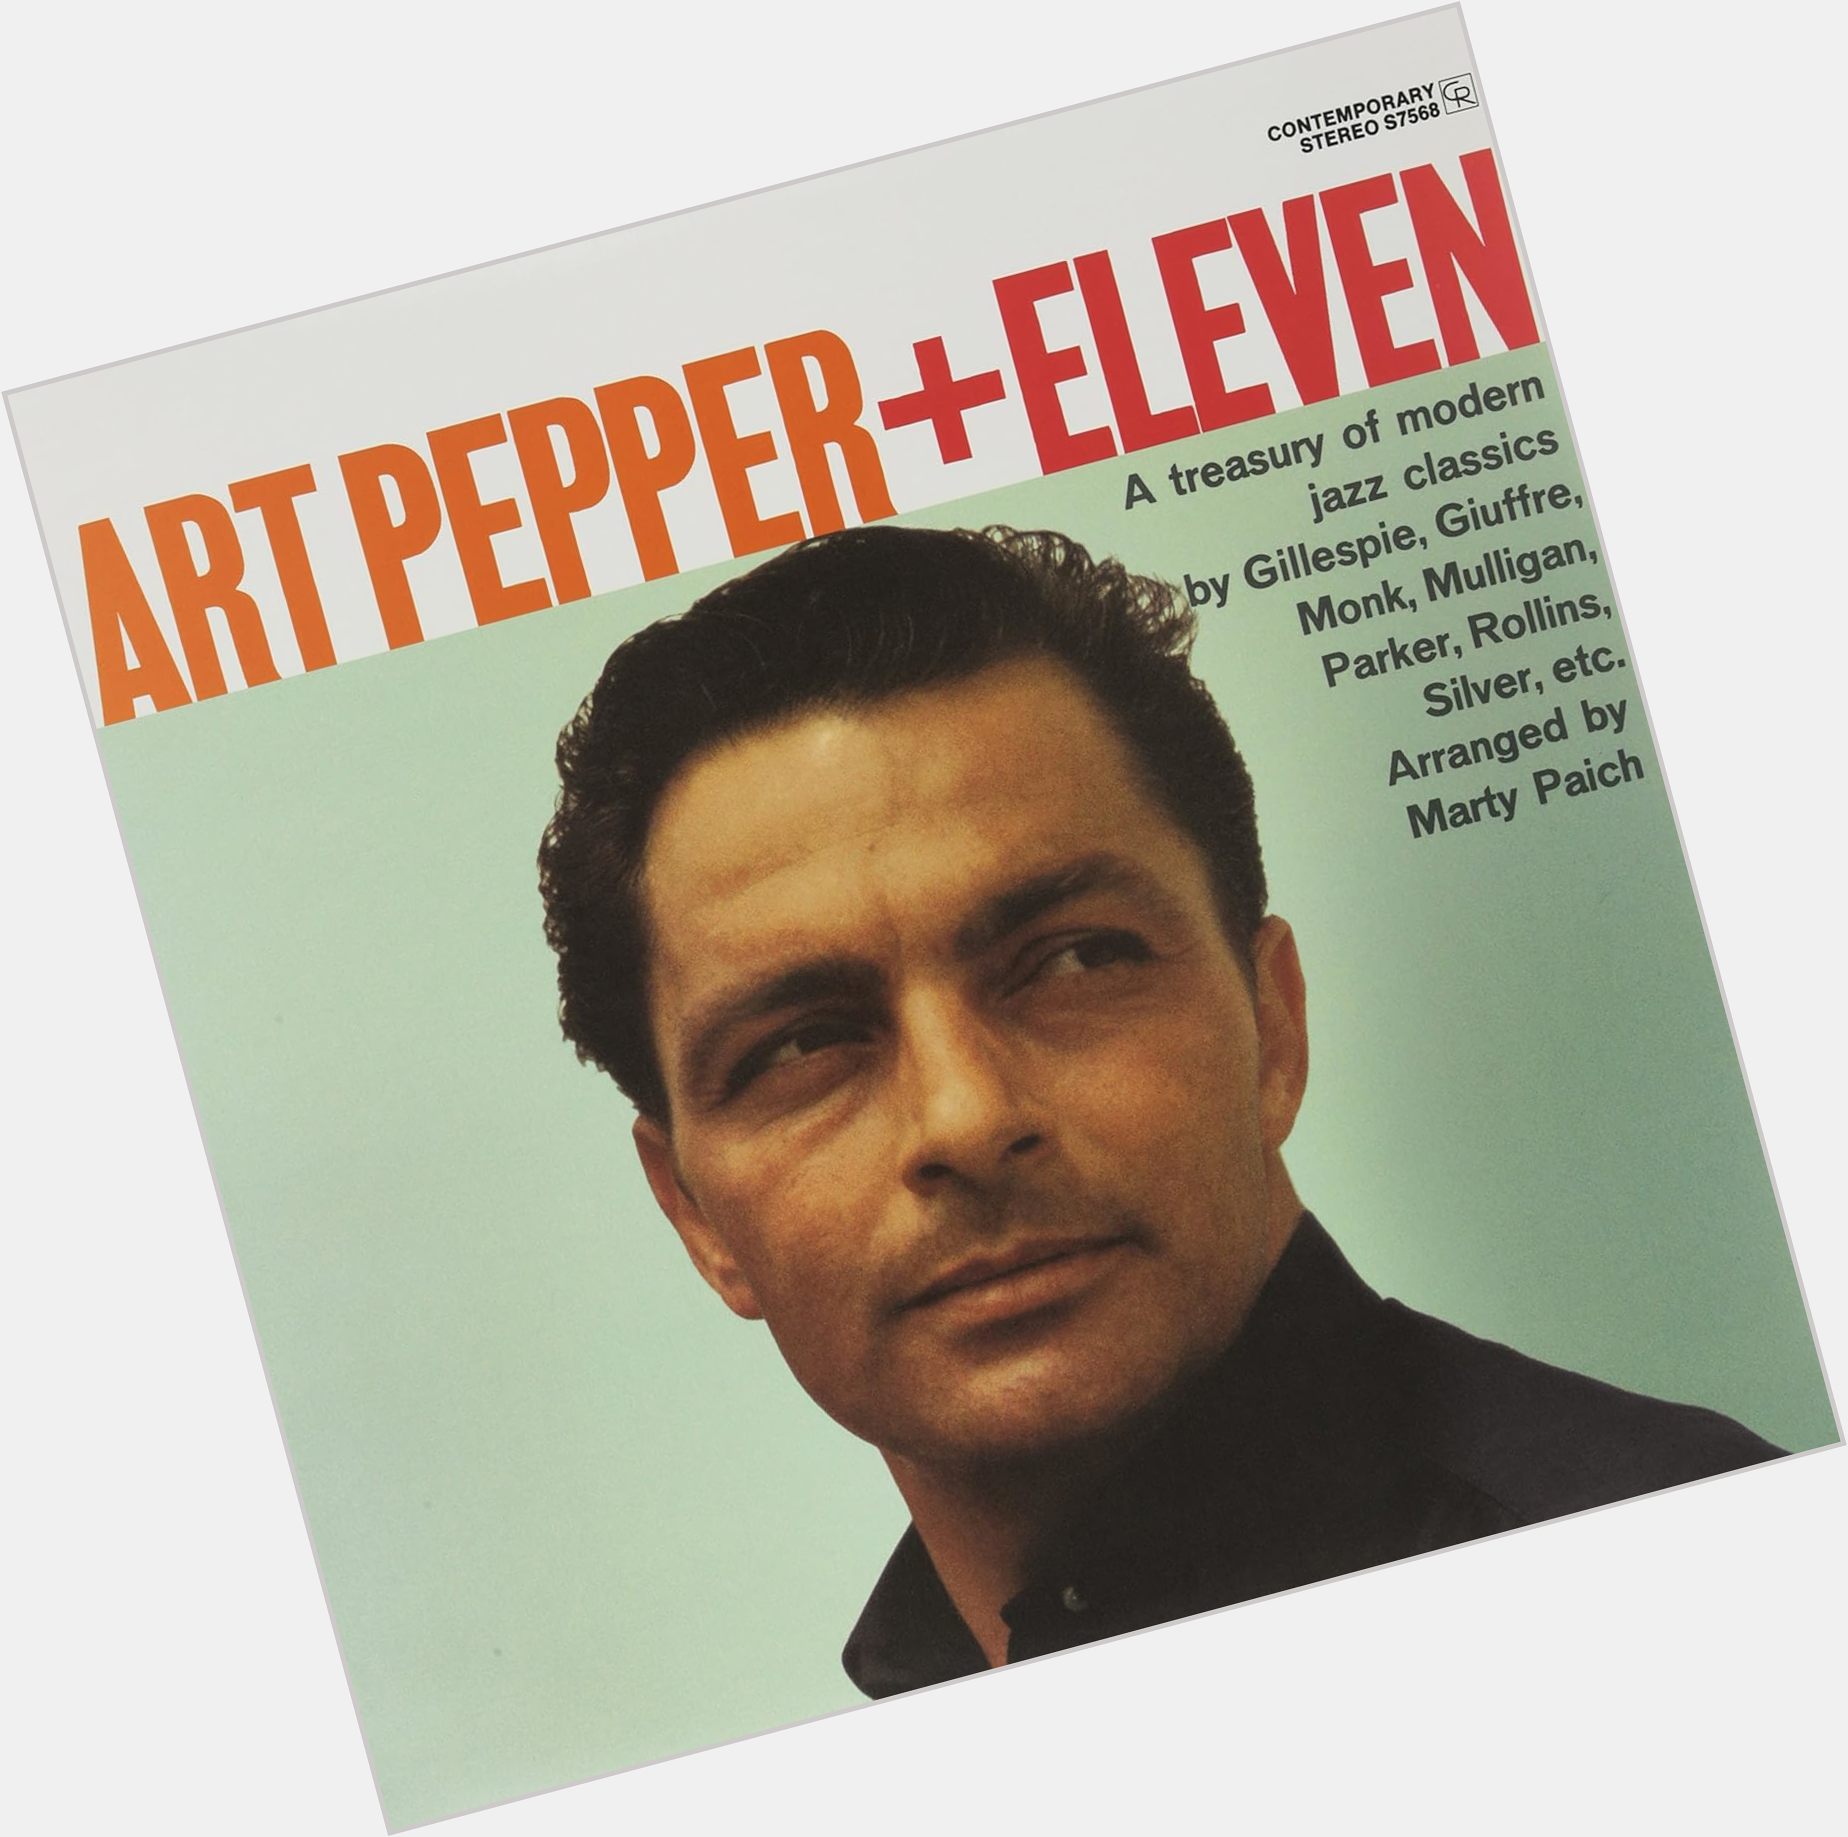 art pepper meets the rhythm section 0.jpg